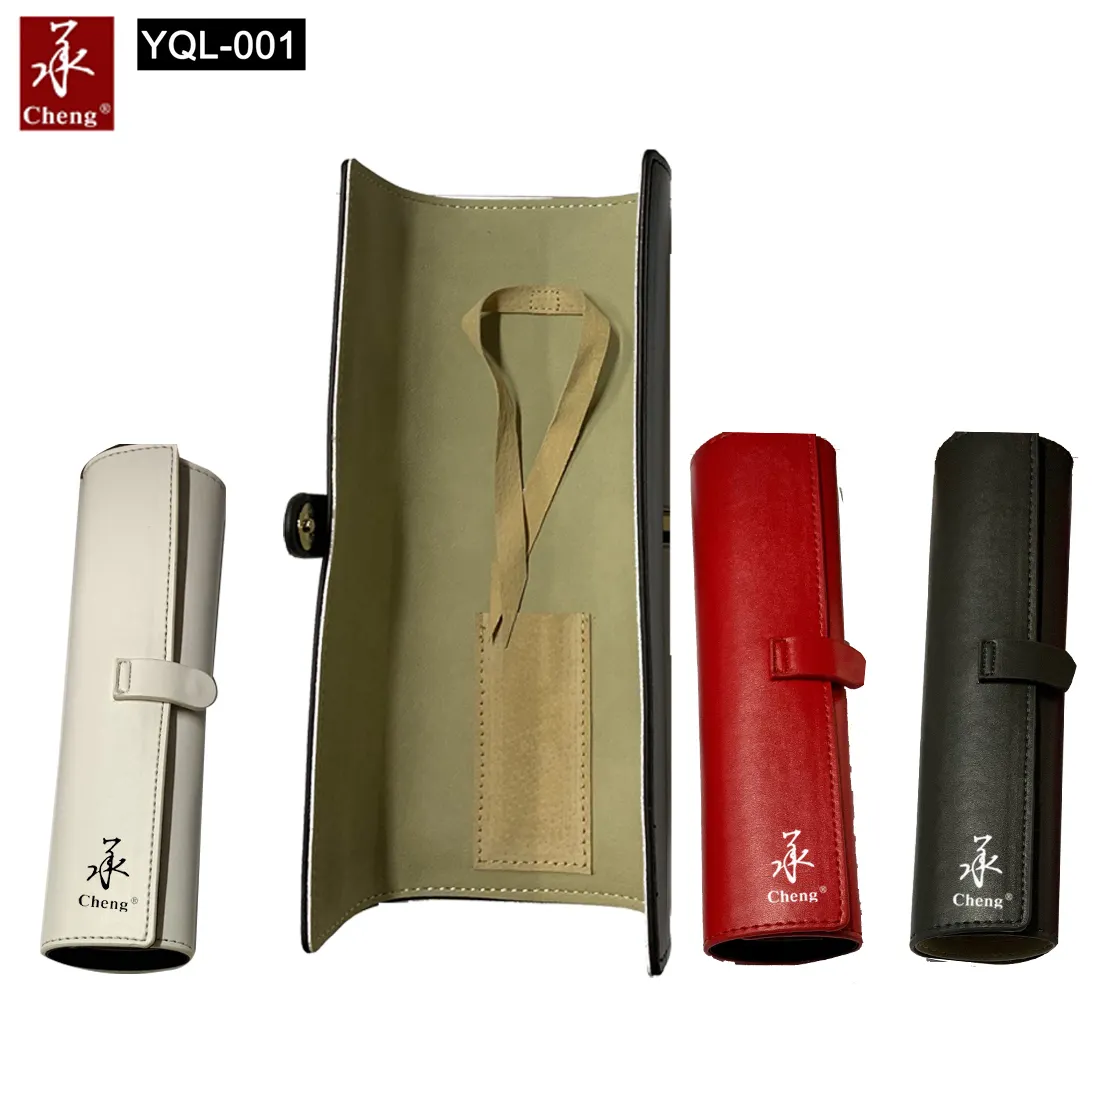 YQL-001 scissor holster case box bag for salon hair cutting shears YONGHE CHENG